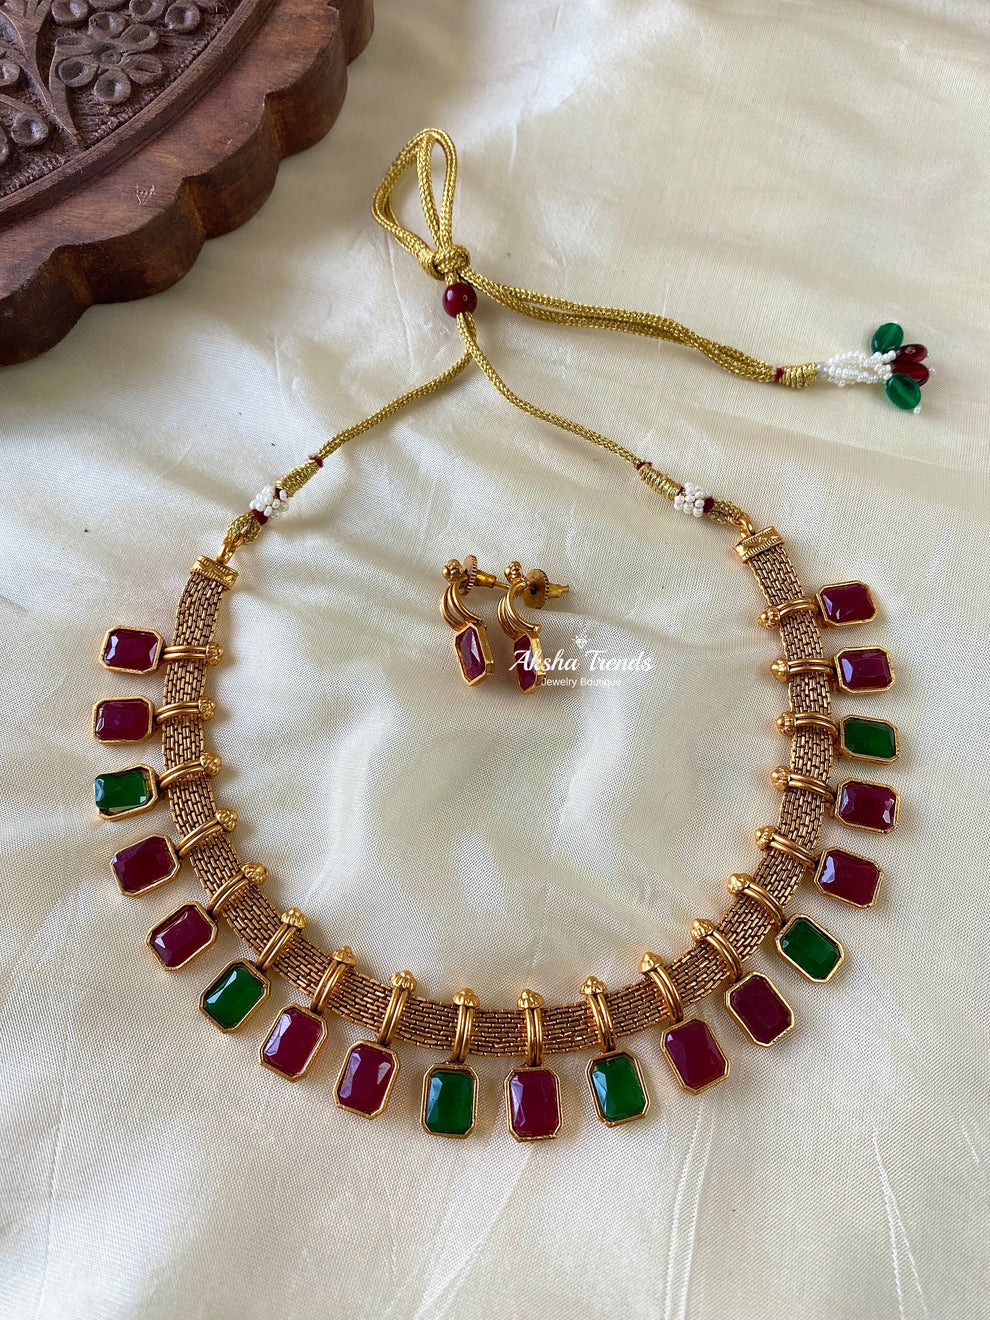 Gold Stone necklace Aksha Trends 